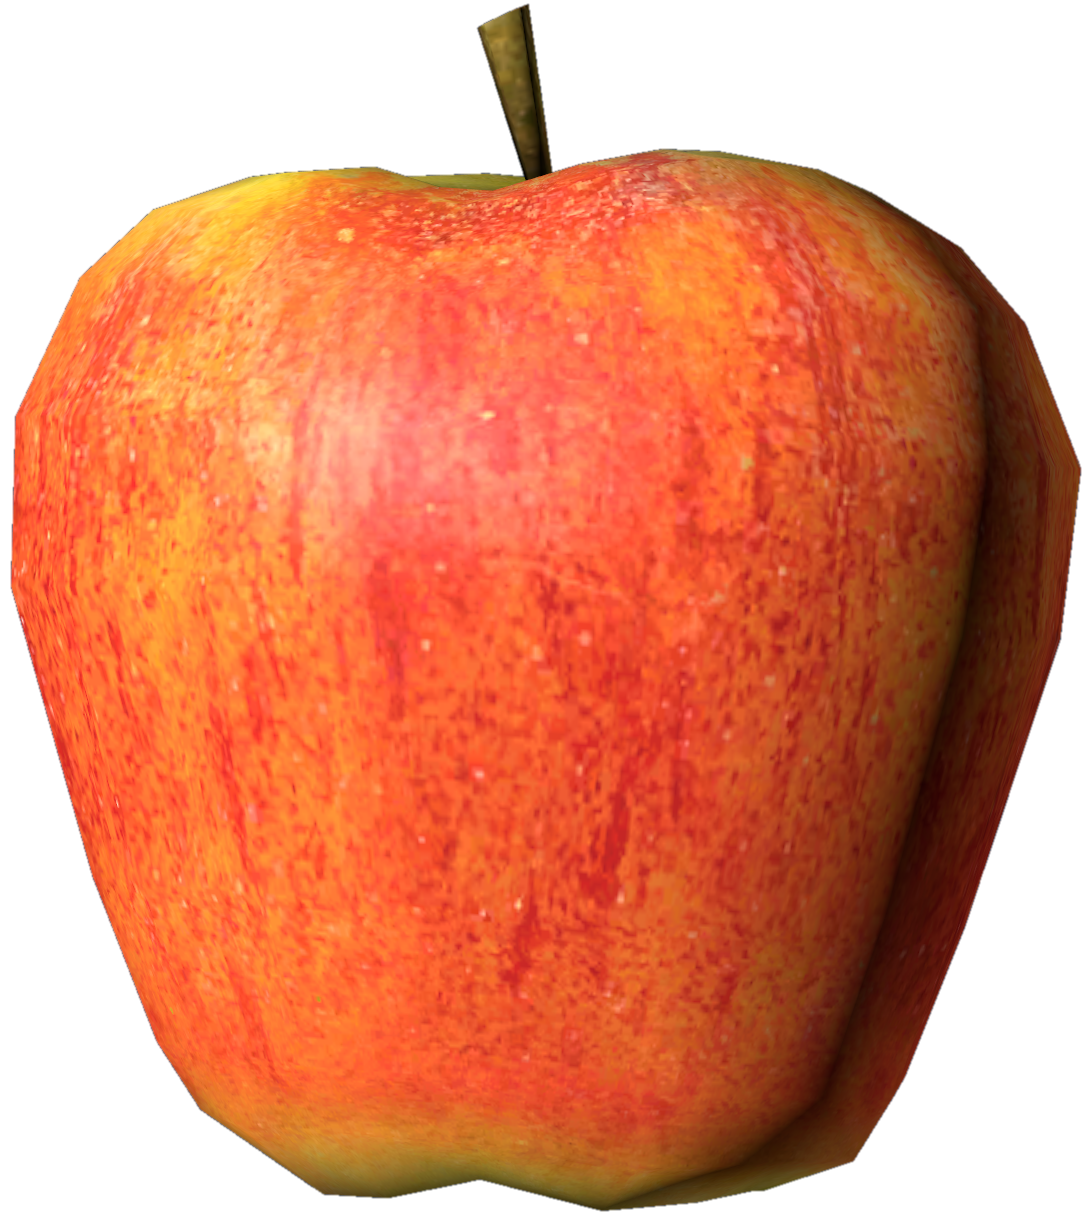 Apple - Wikipedia